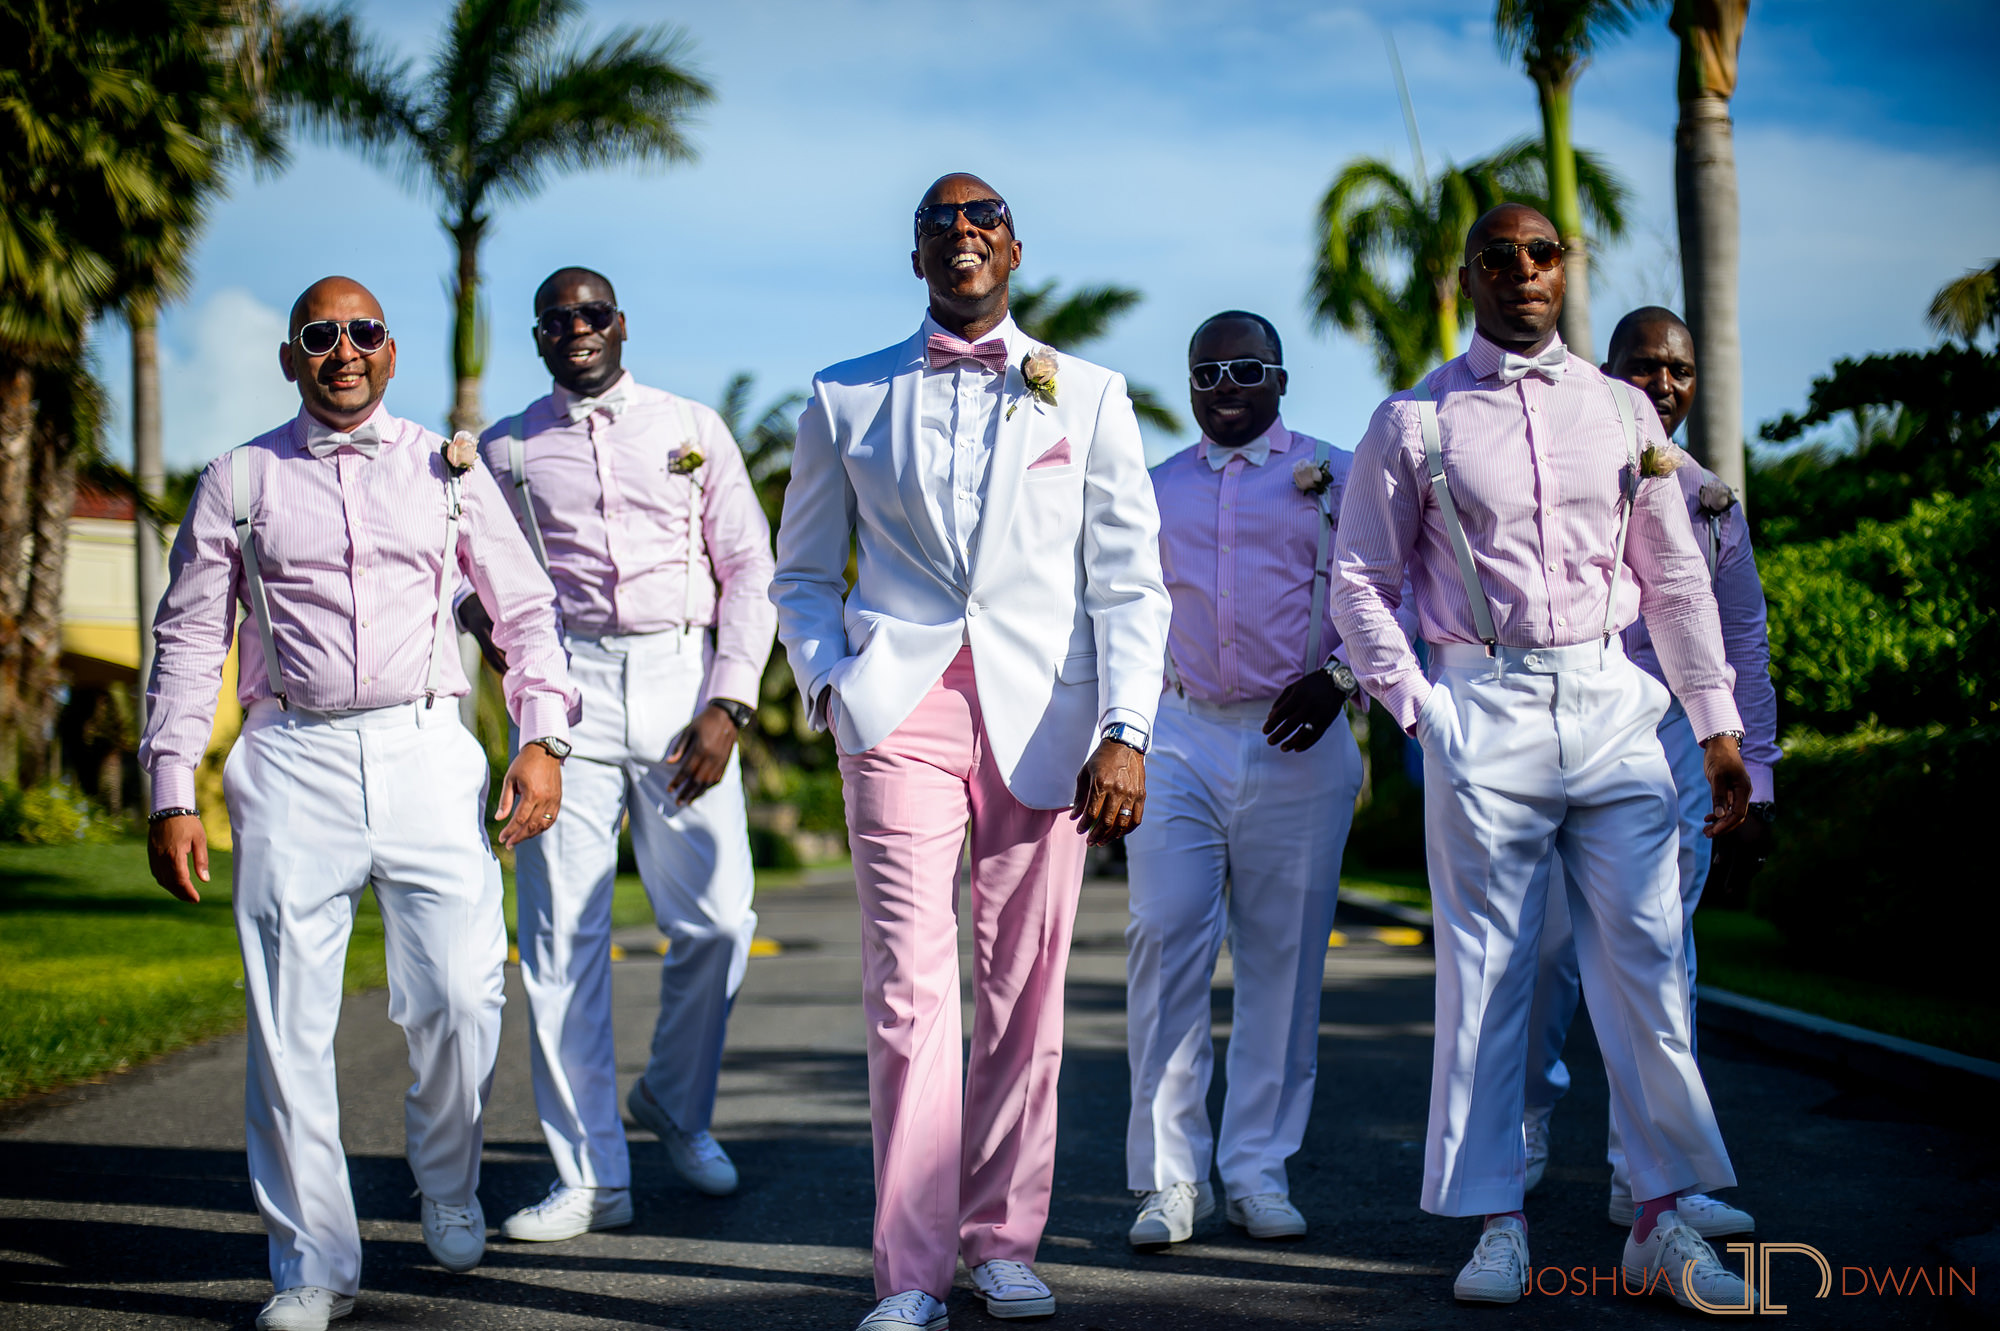 Amazing Destination Wedding at Beaches Turks & Caicos